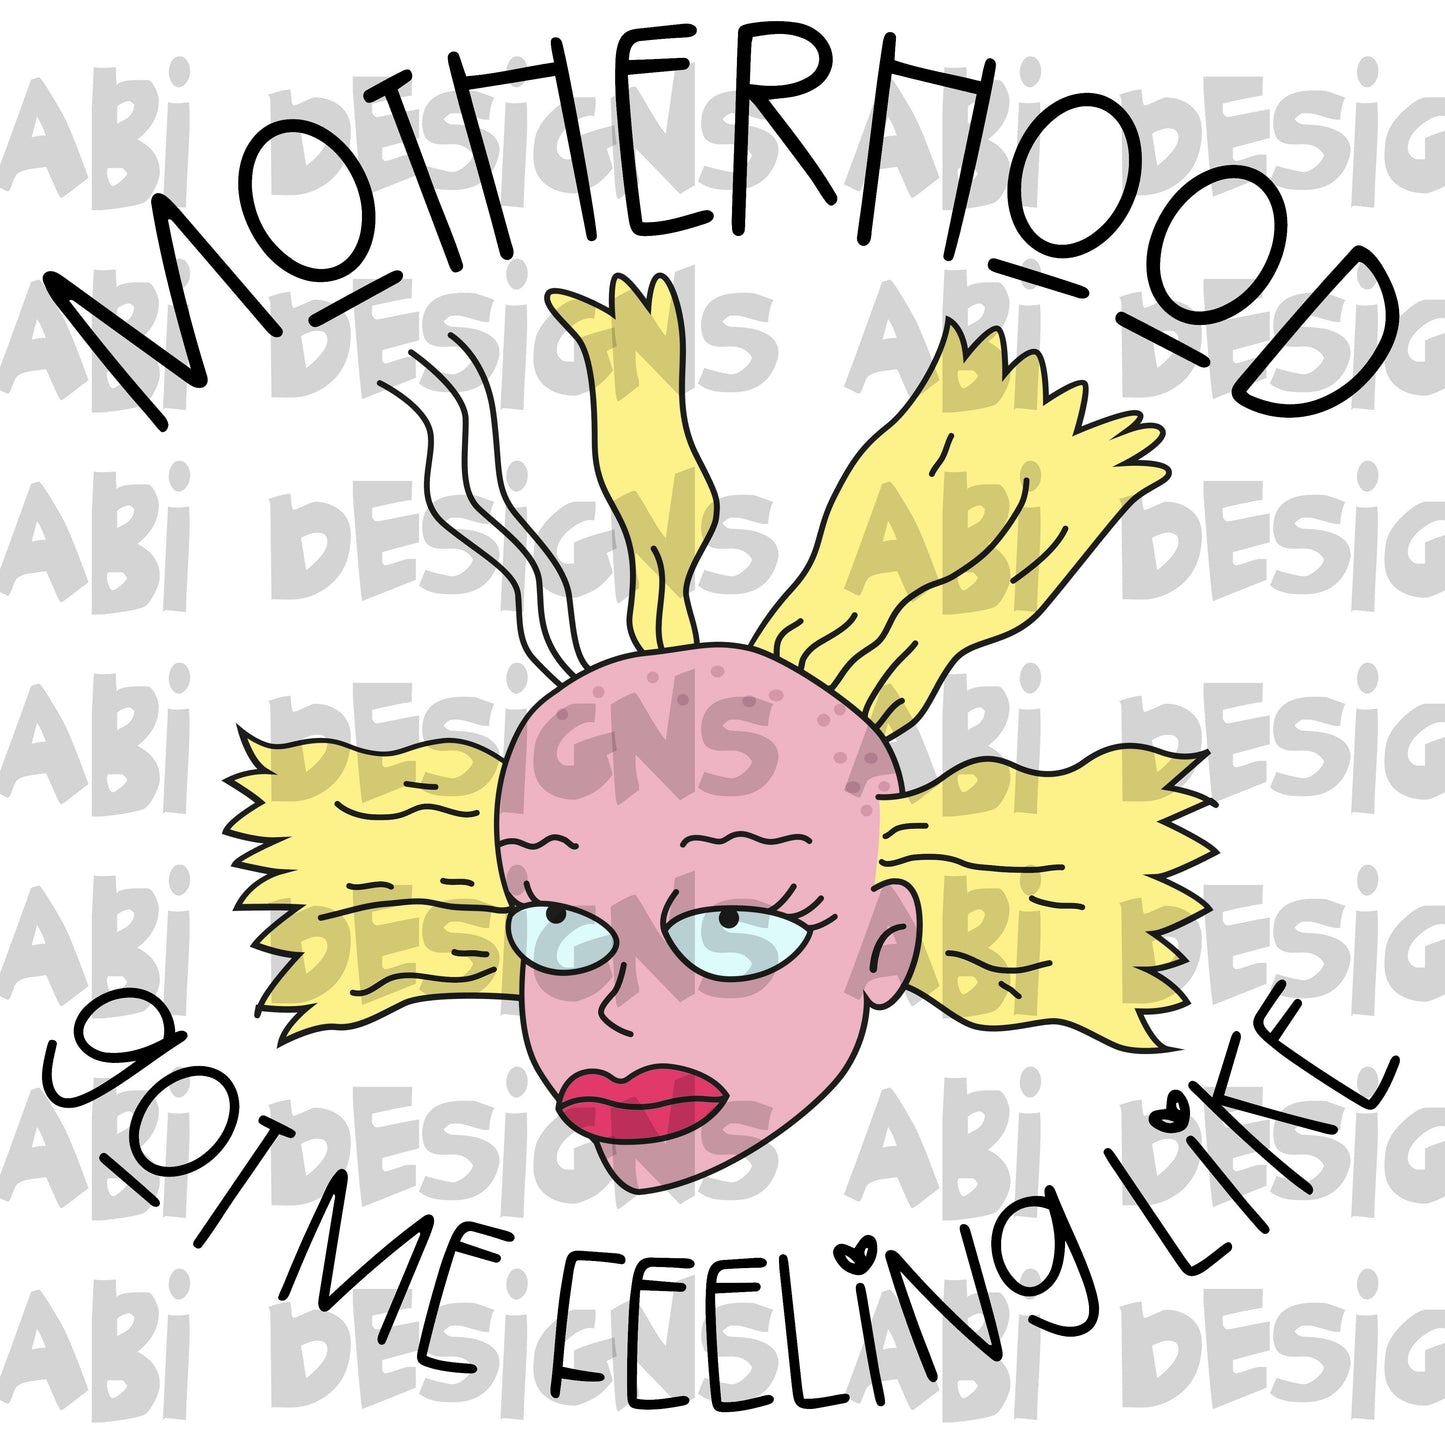 Motherhood got me feeling like-DTF